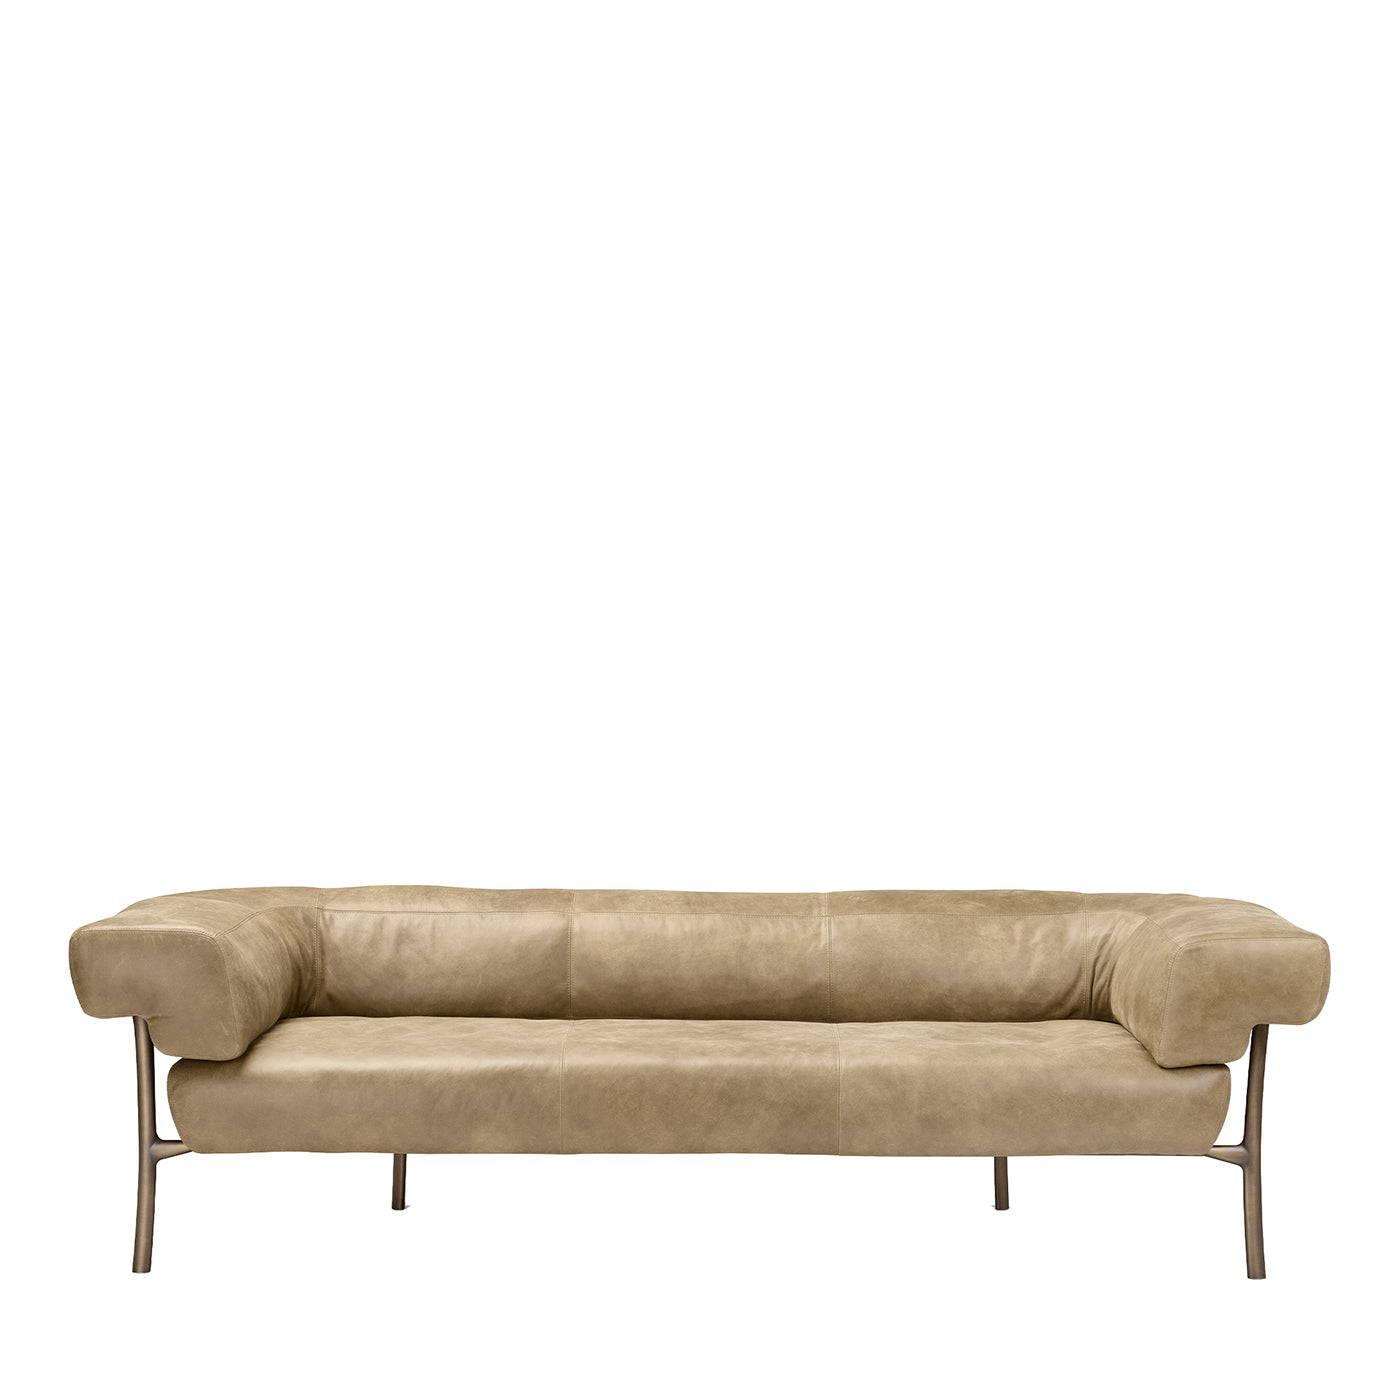 Katana Beige Leather Sofa by Paolo Rizzatto - Main view